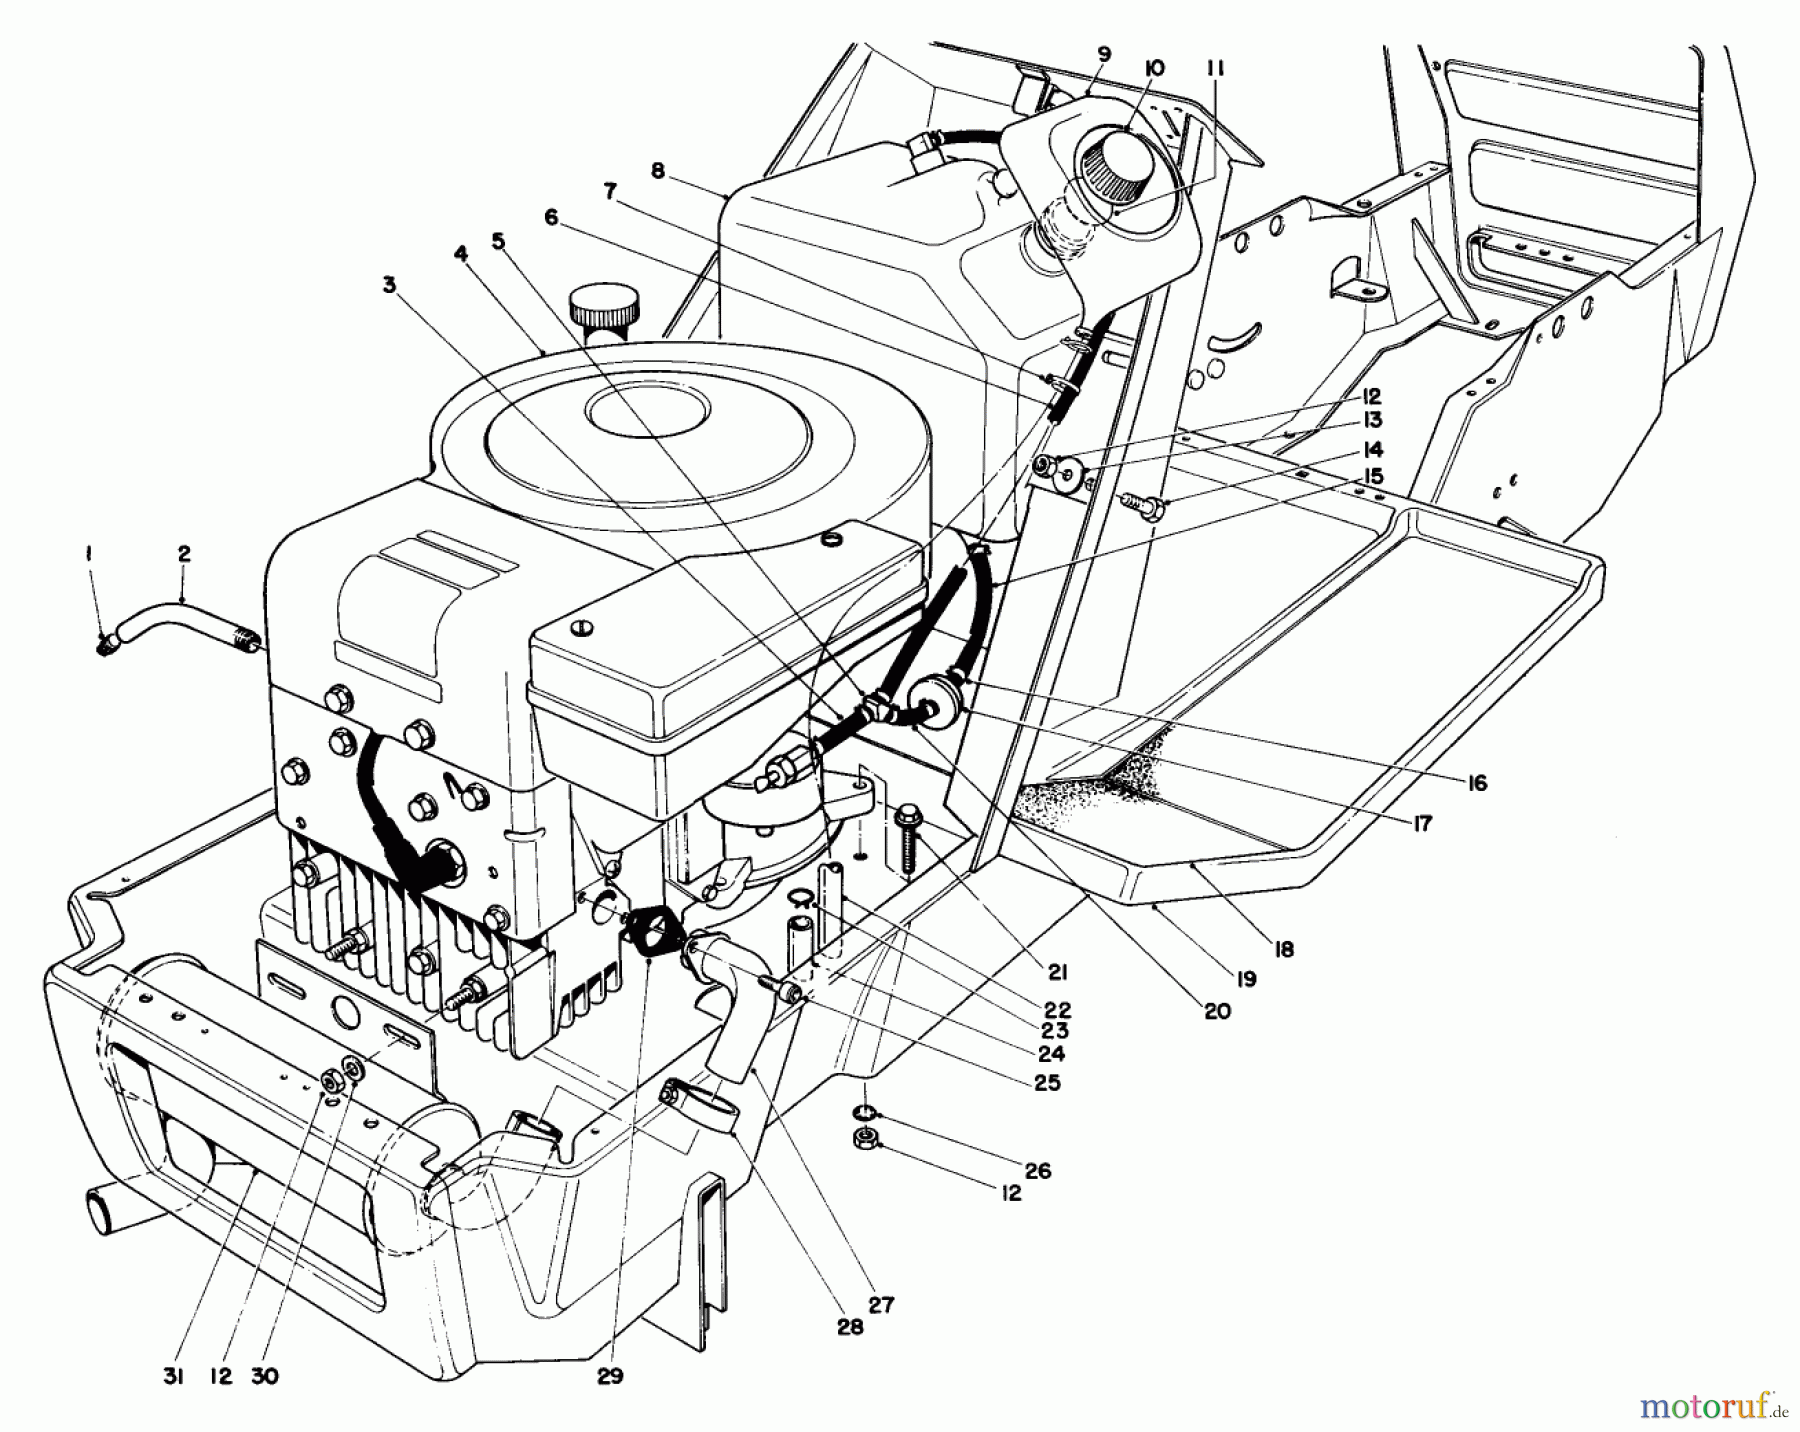  Toro Neu Mowers, Lawn & Garden Tractor Seite 1 57300 (8-32) - Toro 8-32 Front Engine Rider, 1983 (3000001-3999999) ENGINE ASSEMBLY MODEL 57360